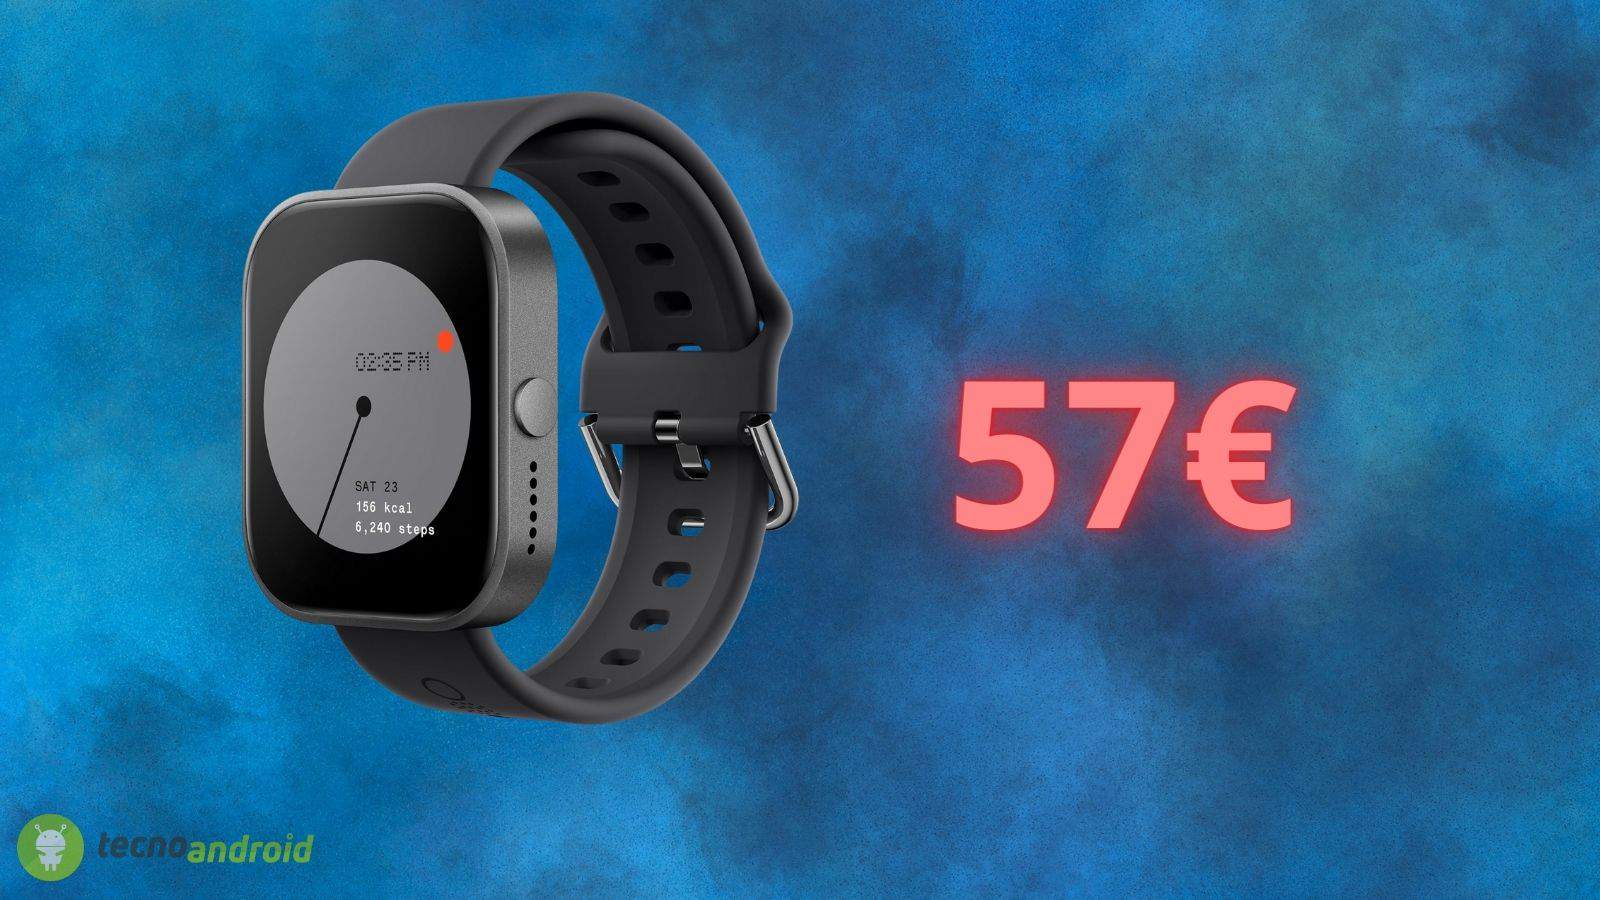 Smartwatch in offerta a 57 euro su Amazon: è UGUALE all'Apple Watch